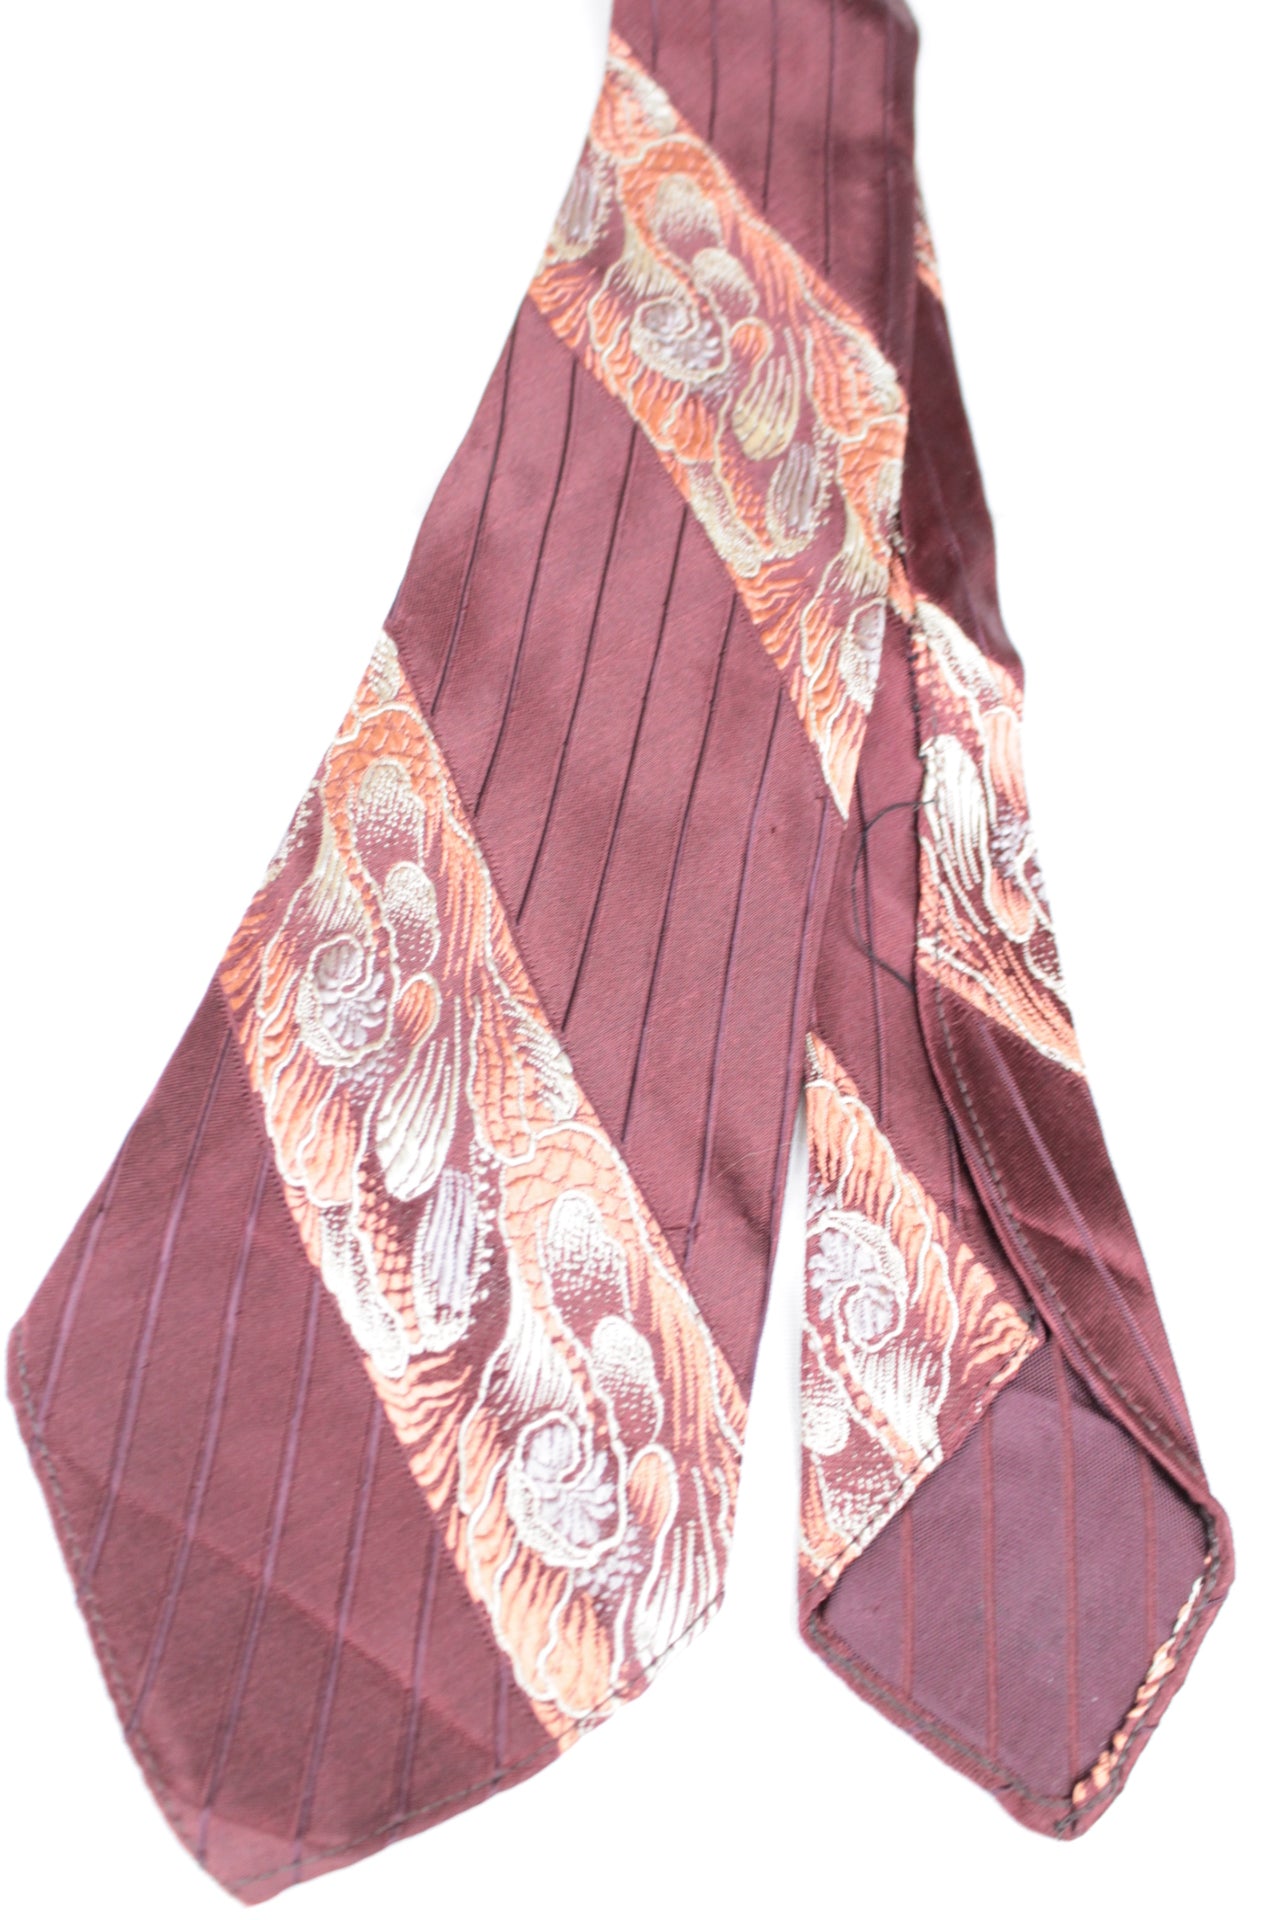 Vintage 1950s Pilgrim Cravats Brown embroidered pattern jacquard pin stripes Swing Tie